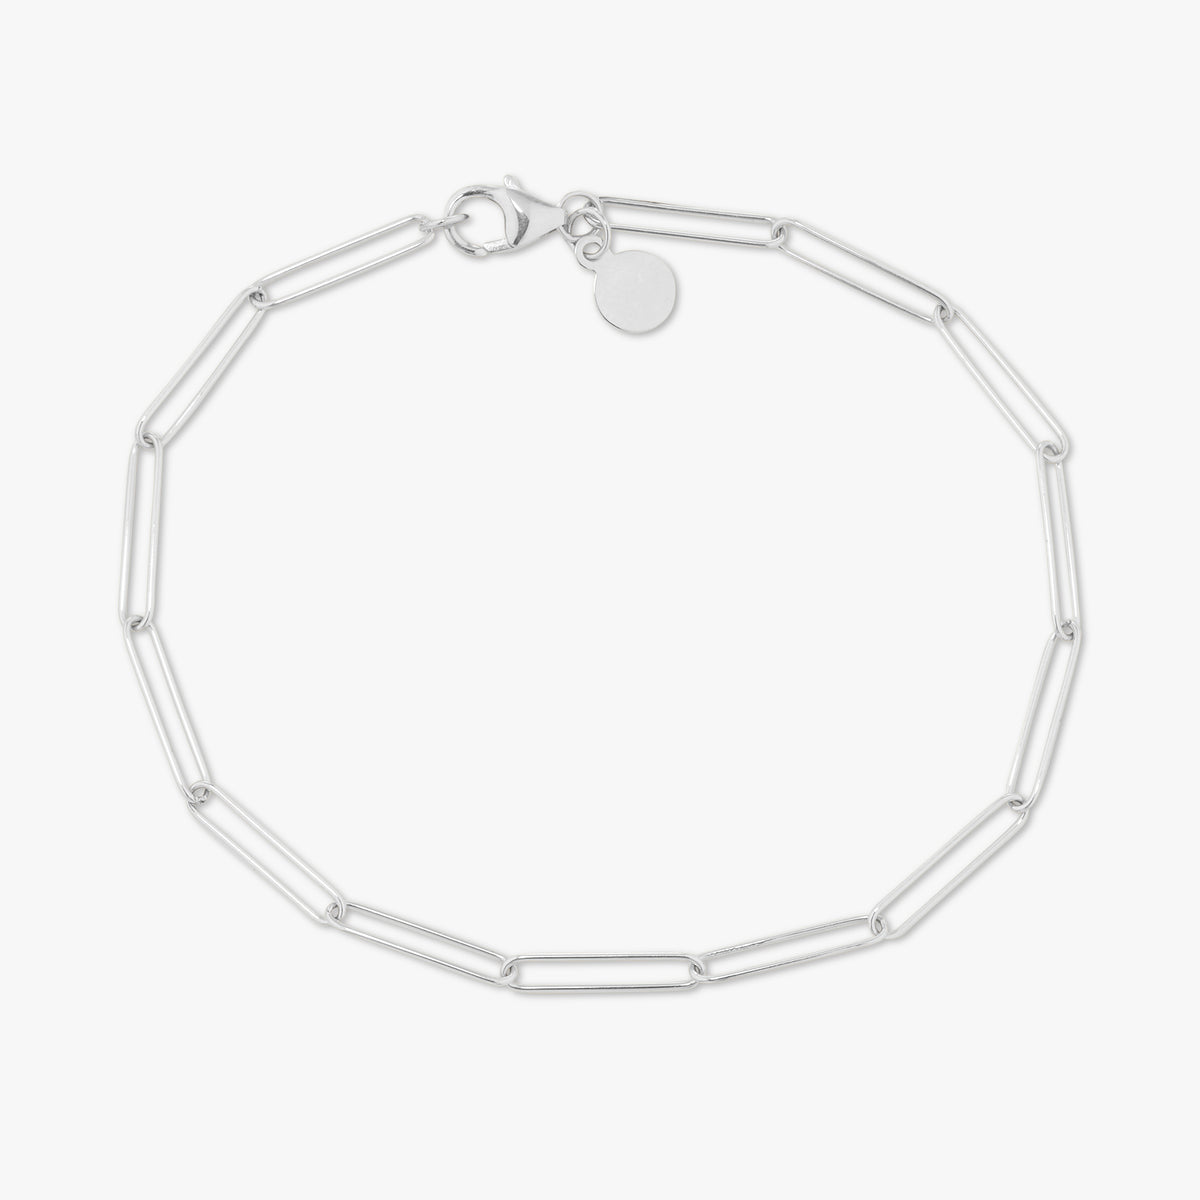 Lungo Paperclip Chain Bracelet 2.7mm